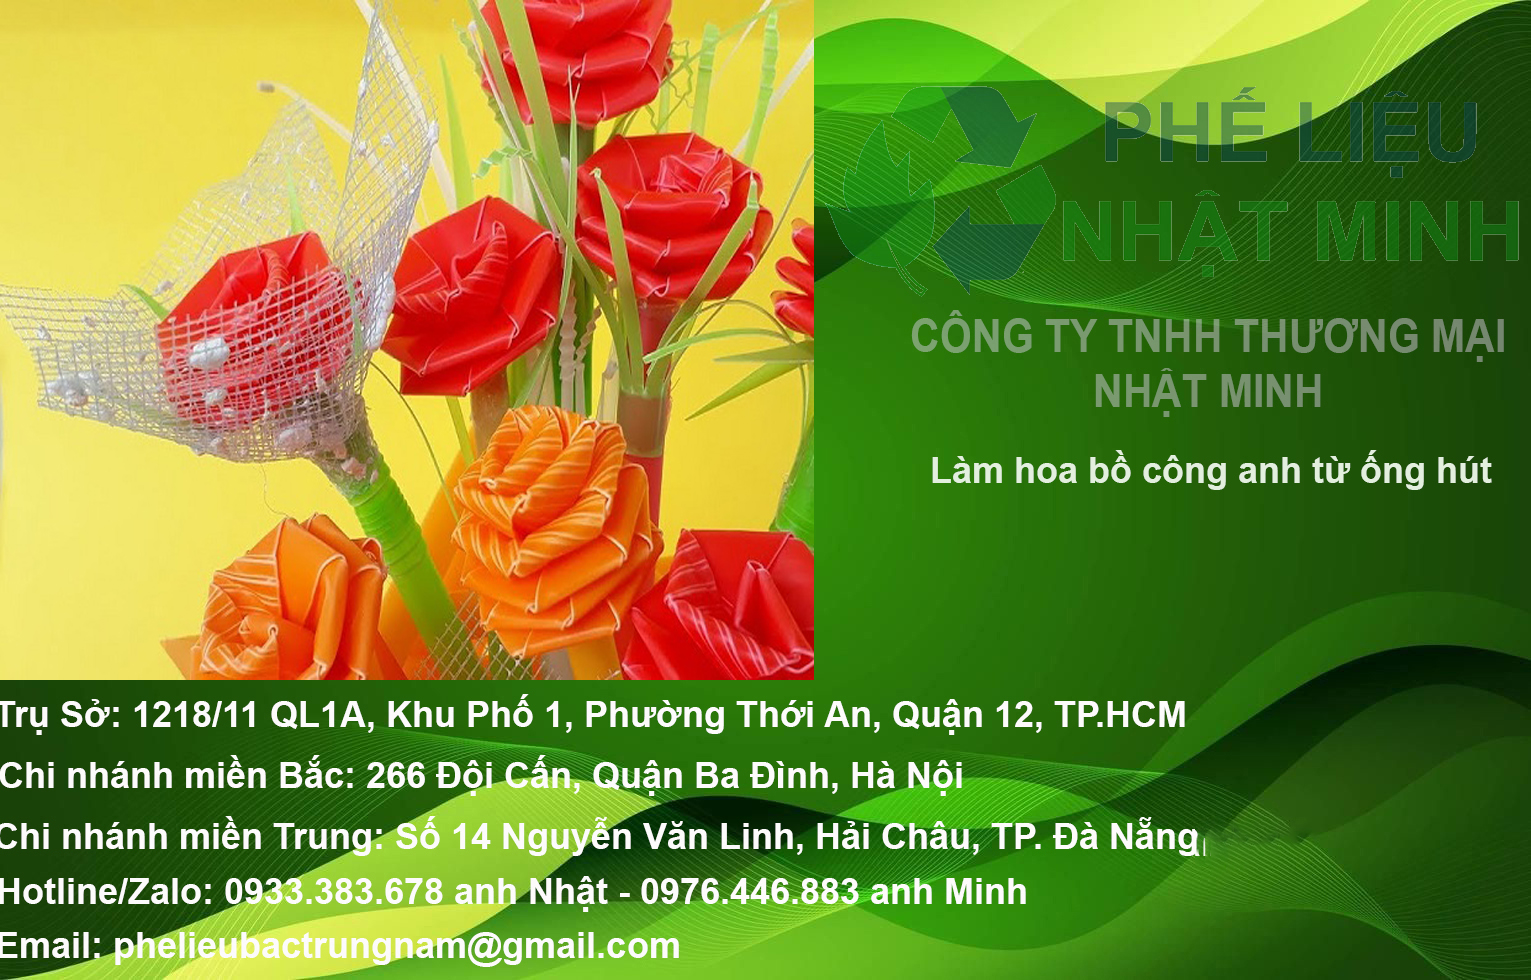 LAM HOA BANG ONG HUT